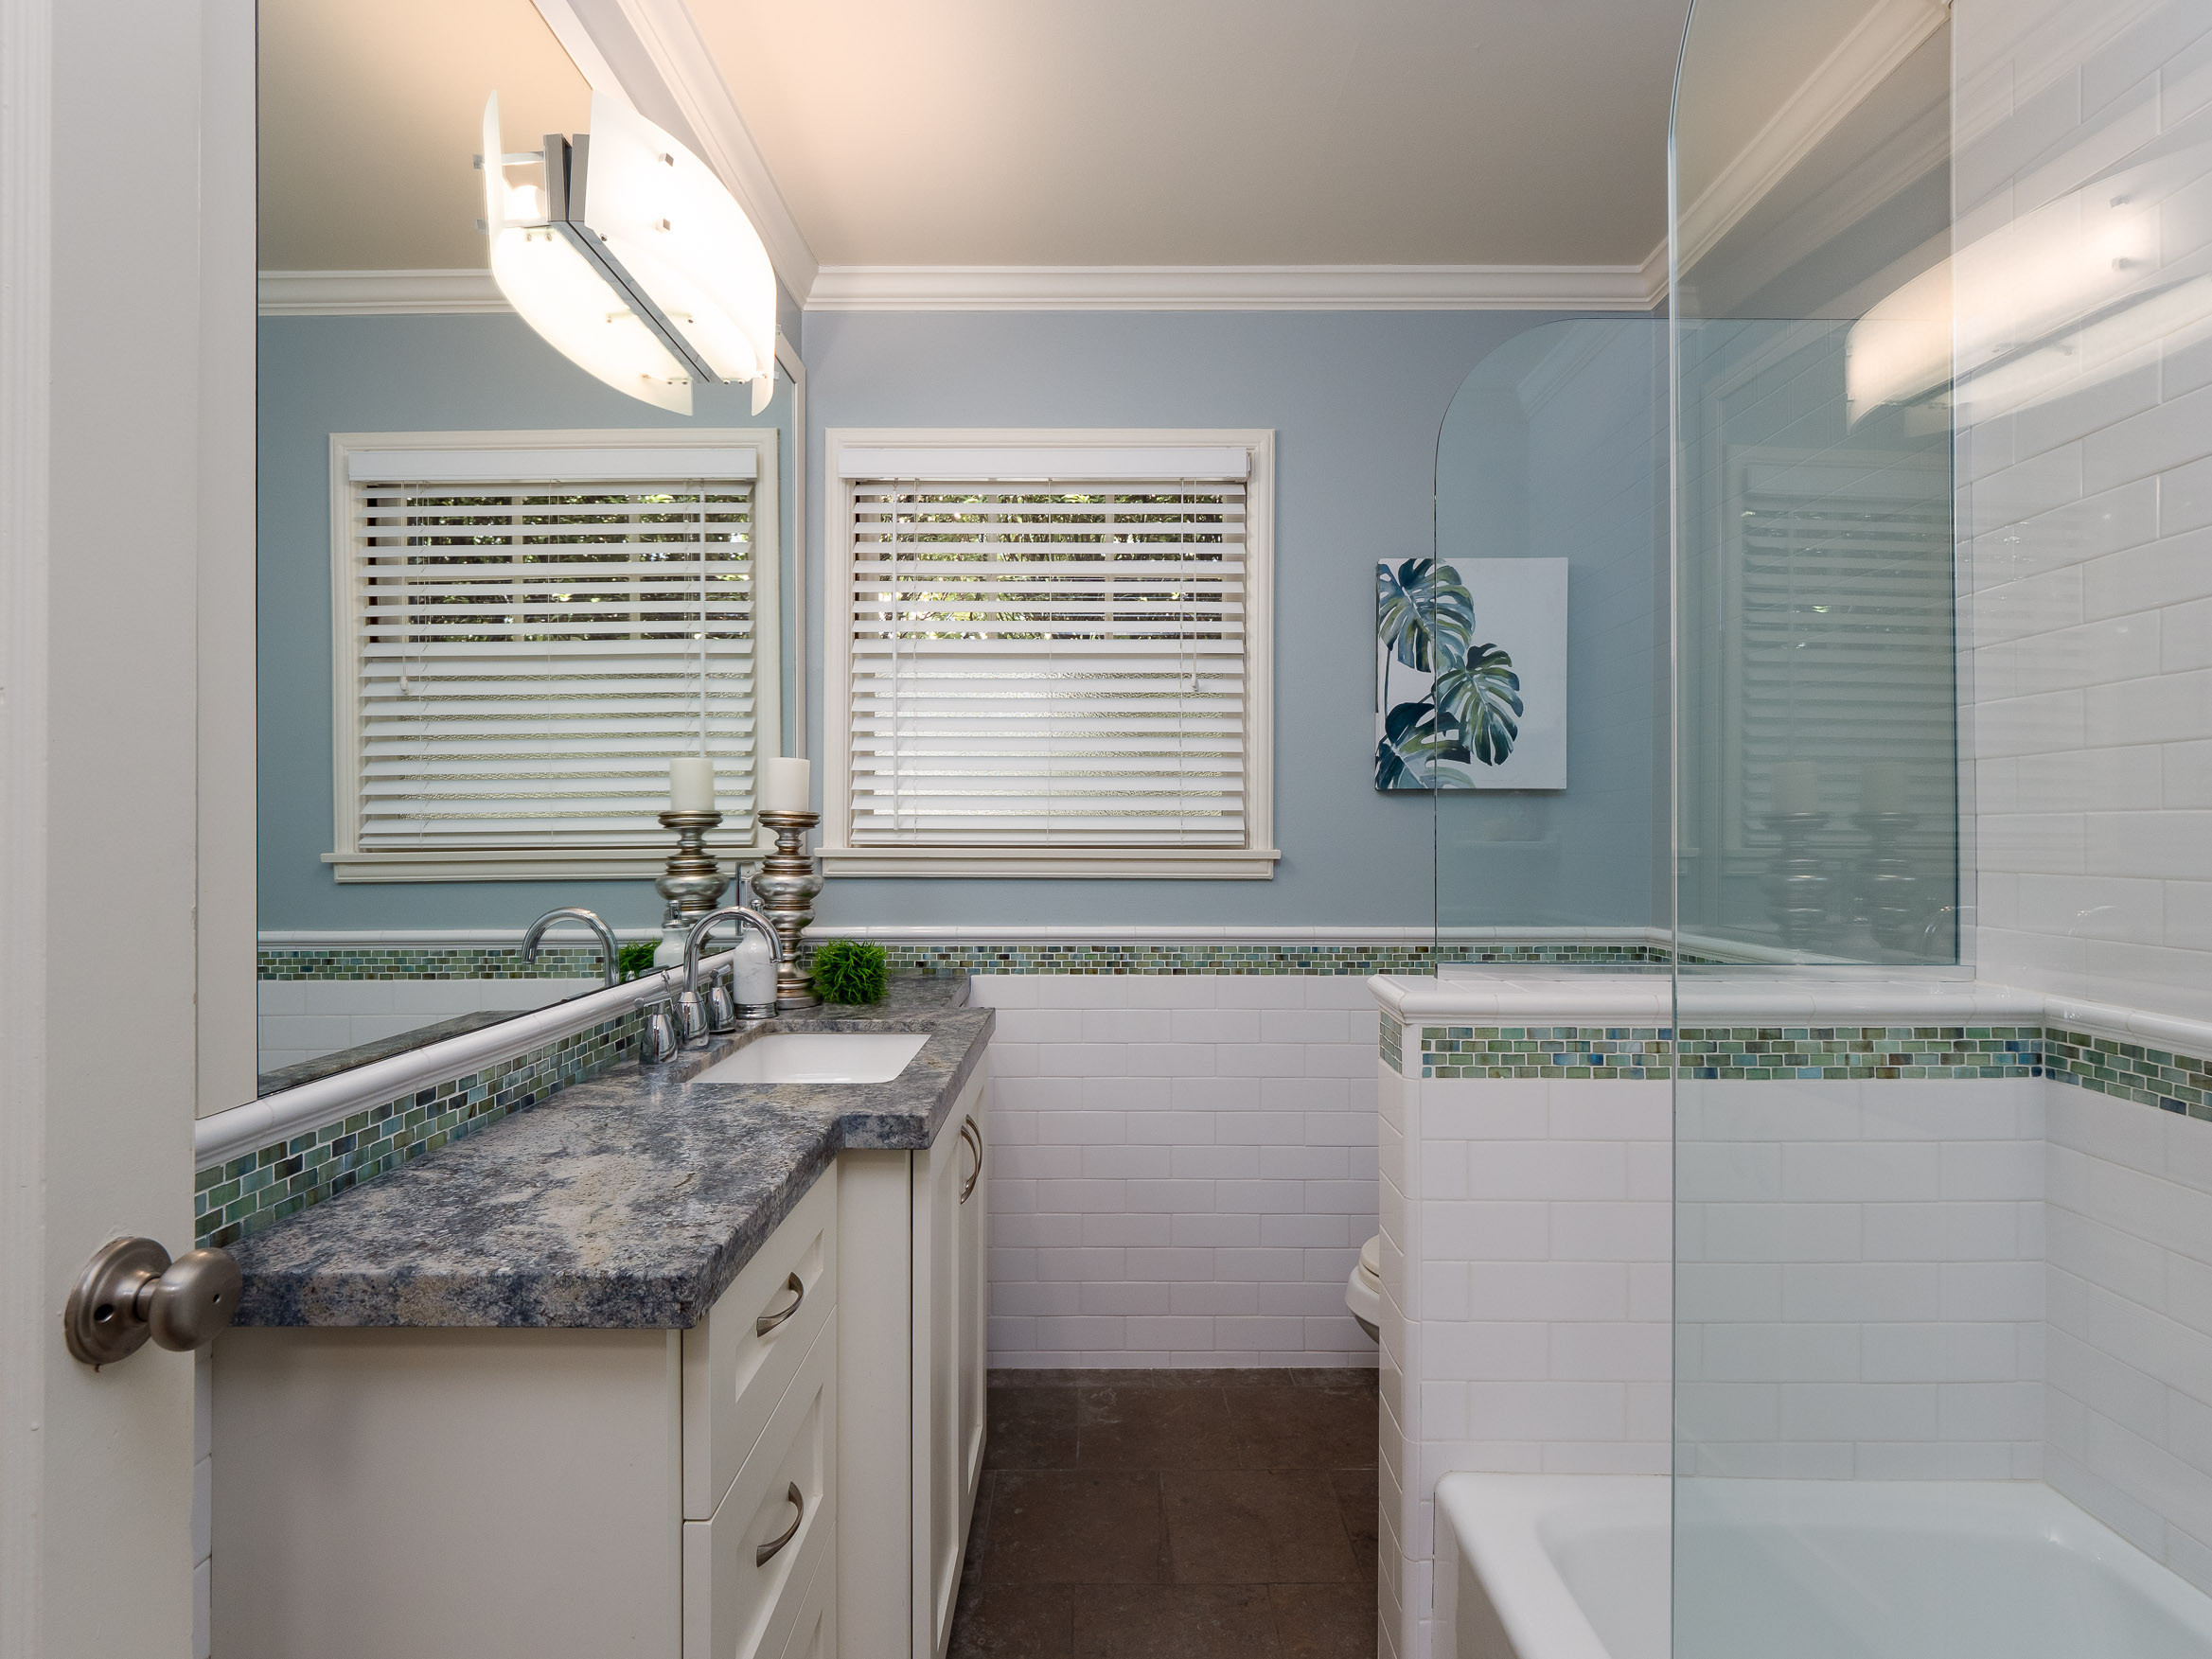 2024 Eaton Avenue Bathroom Mirror Light in White Oaks Neighborhood in San Carlos.